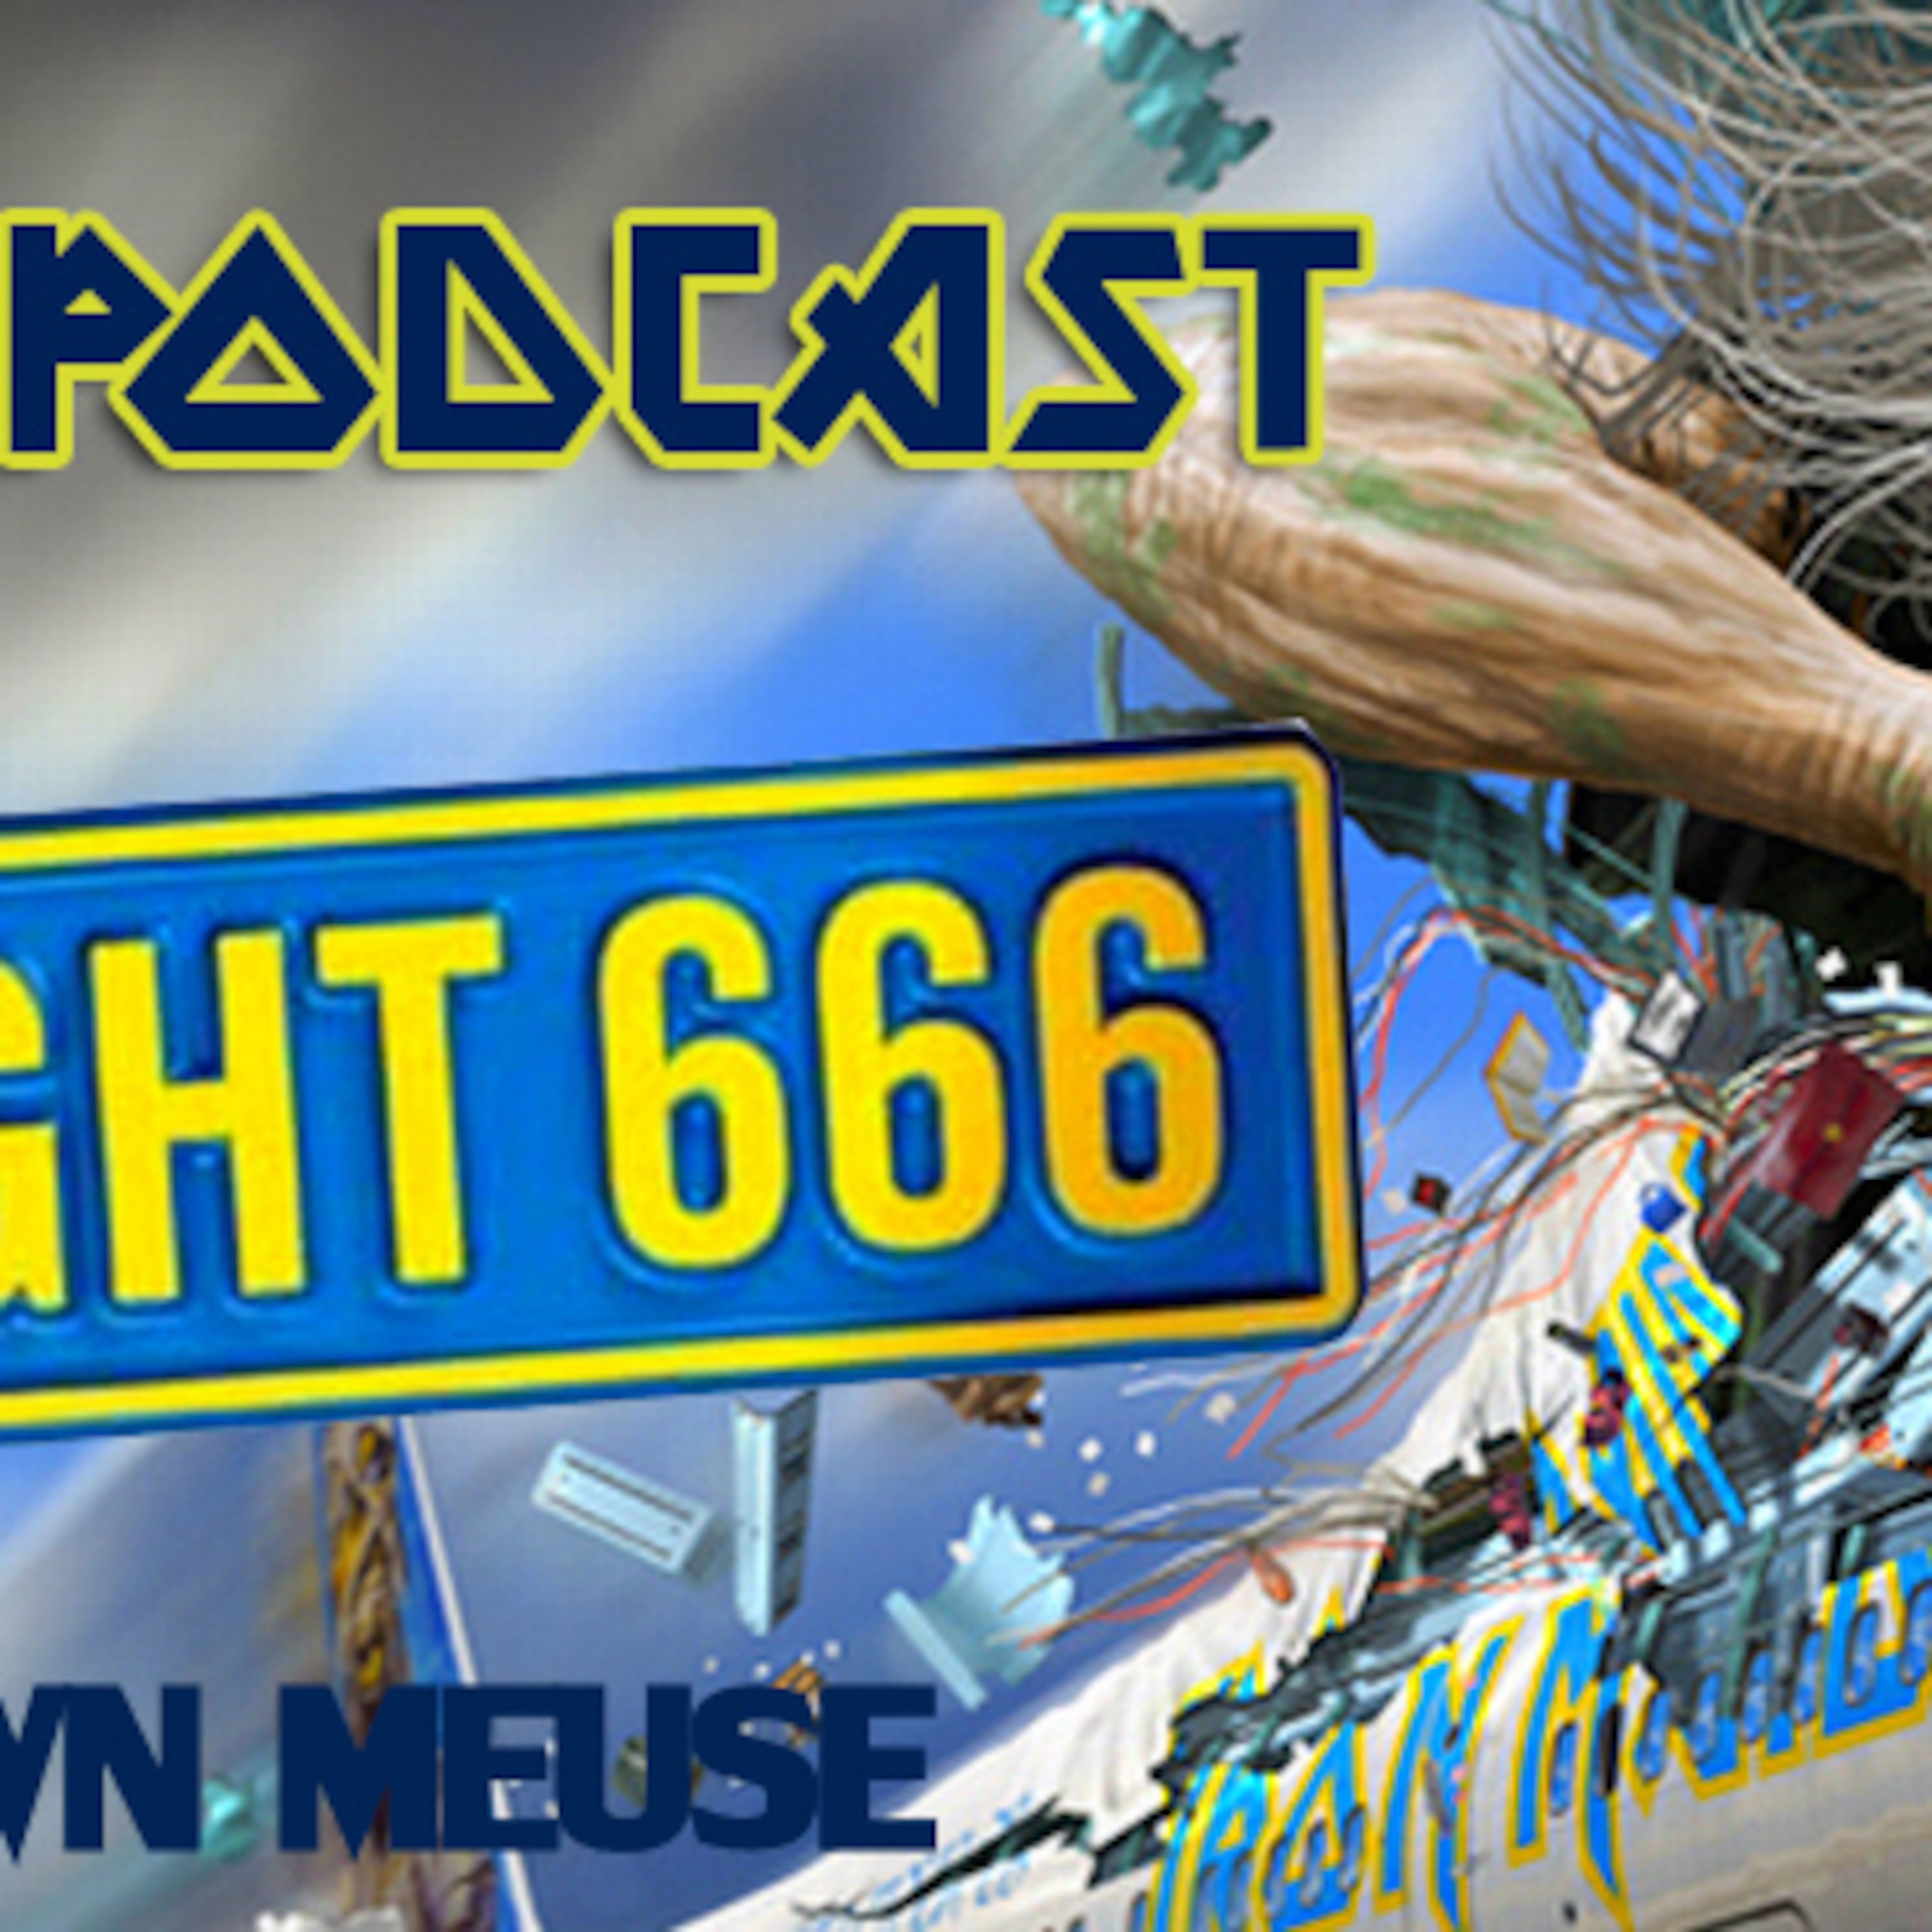 Episode 9: Flight 666 The Iron Maiden Podcast Lyssna här